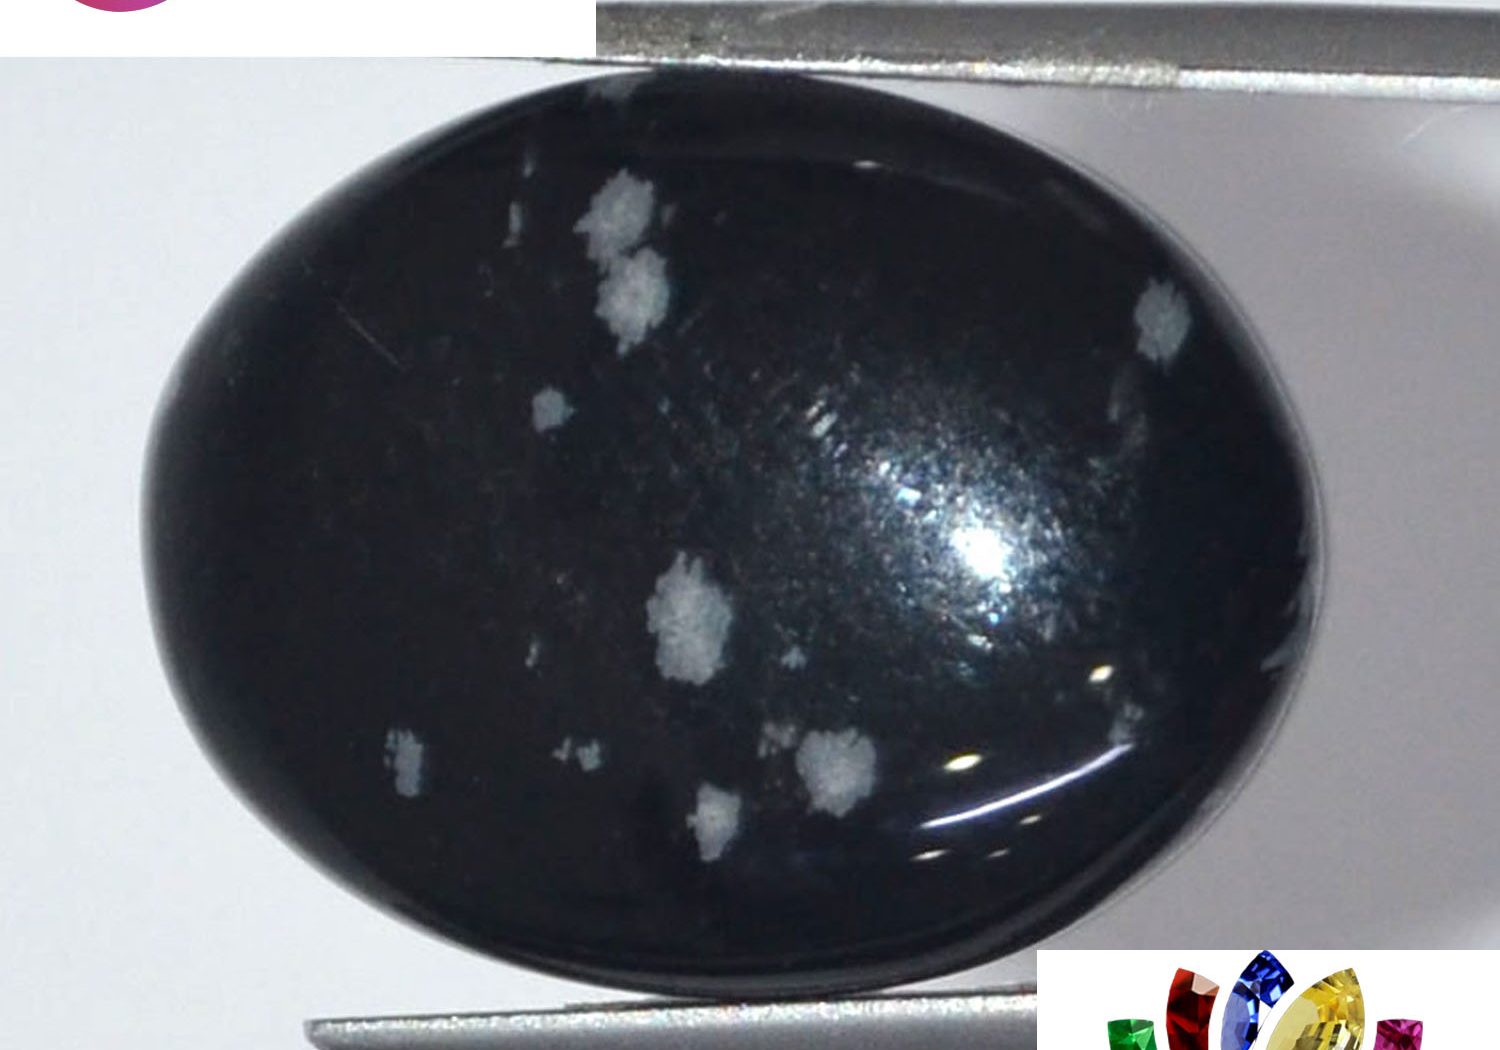 Obsidian 13.46 Ct.